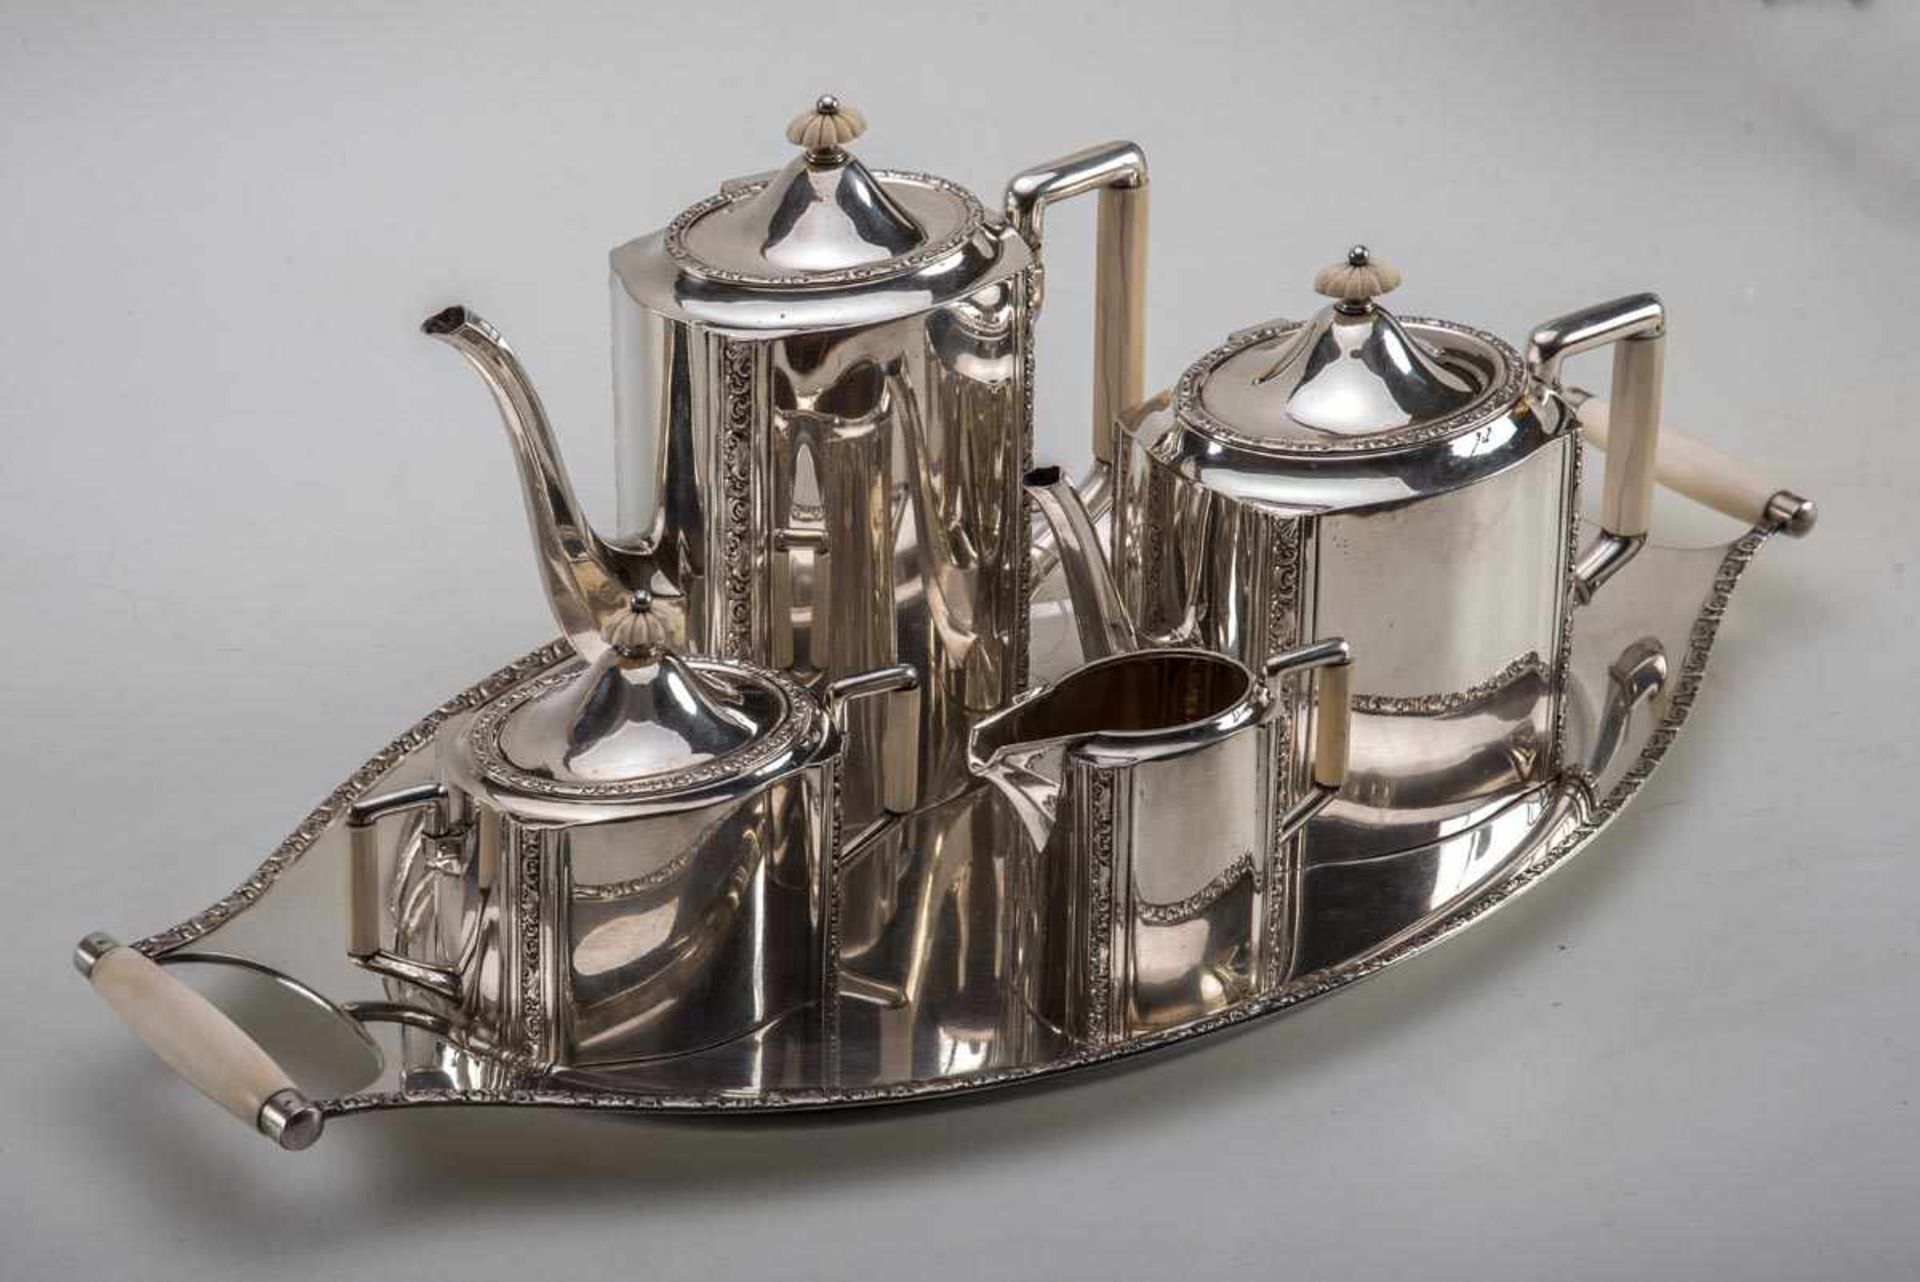 5-teilg. Kaffee-Teeset, Bremer SilberwerkstättenArt Déco um 1920-30. 800er Silber, teilweise innen - Bild 2 aus 3